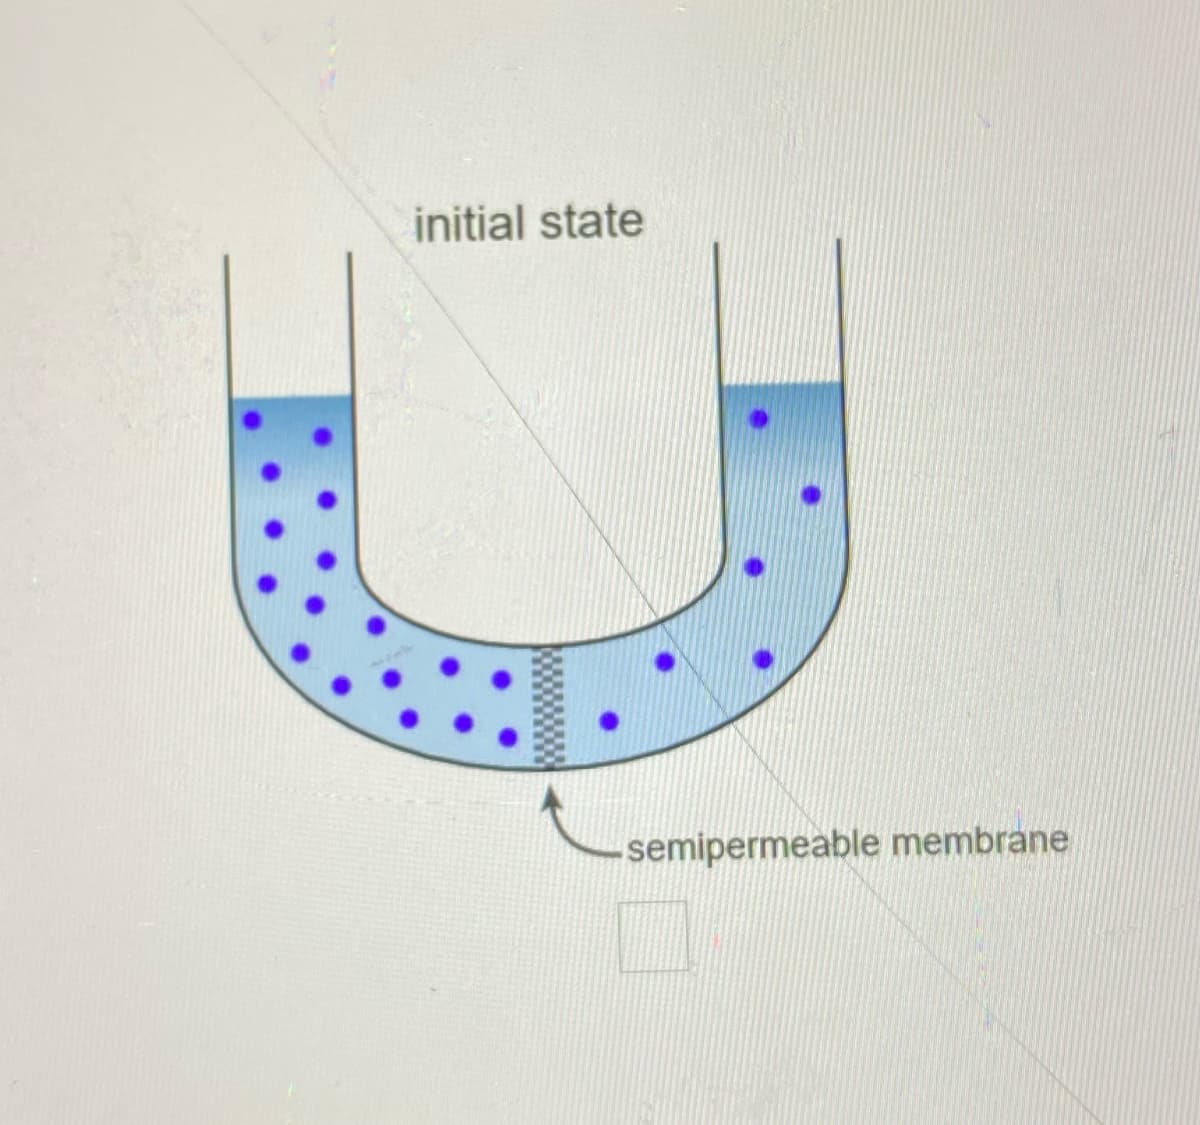 initial state
-semipermeable membrane